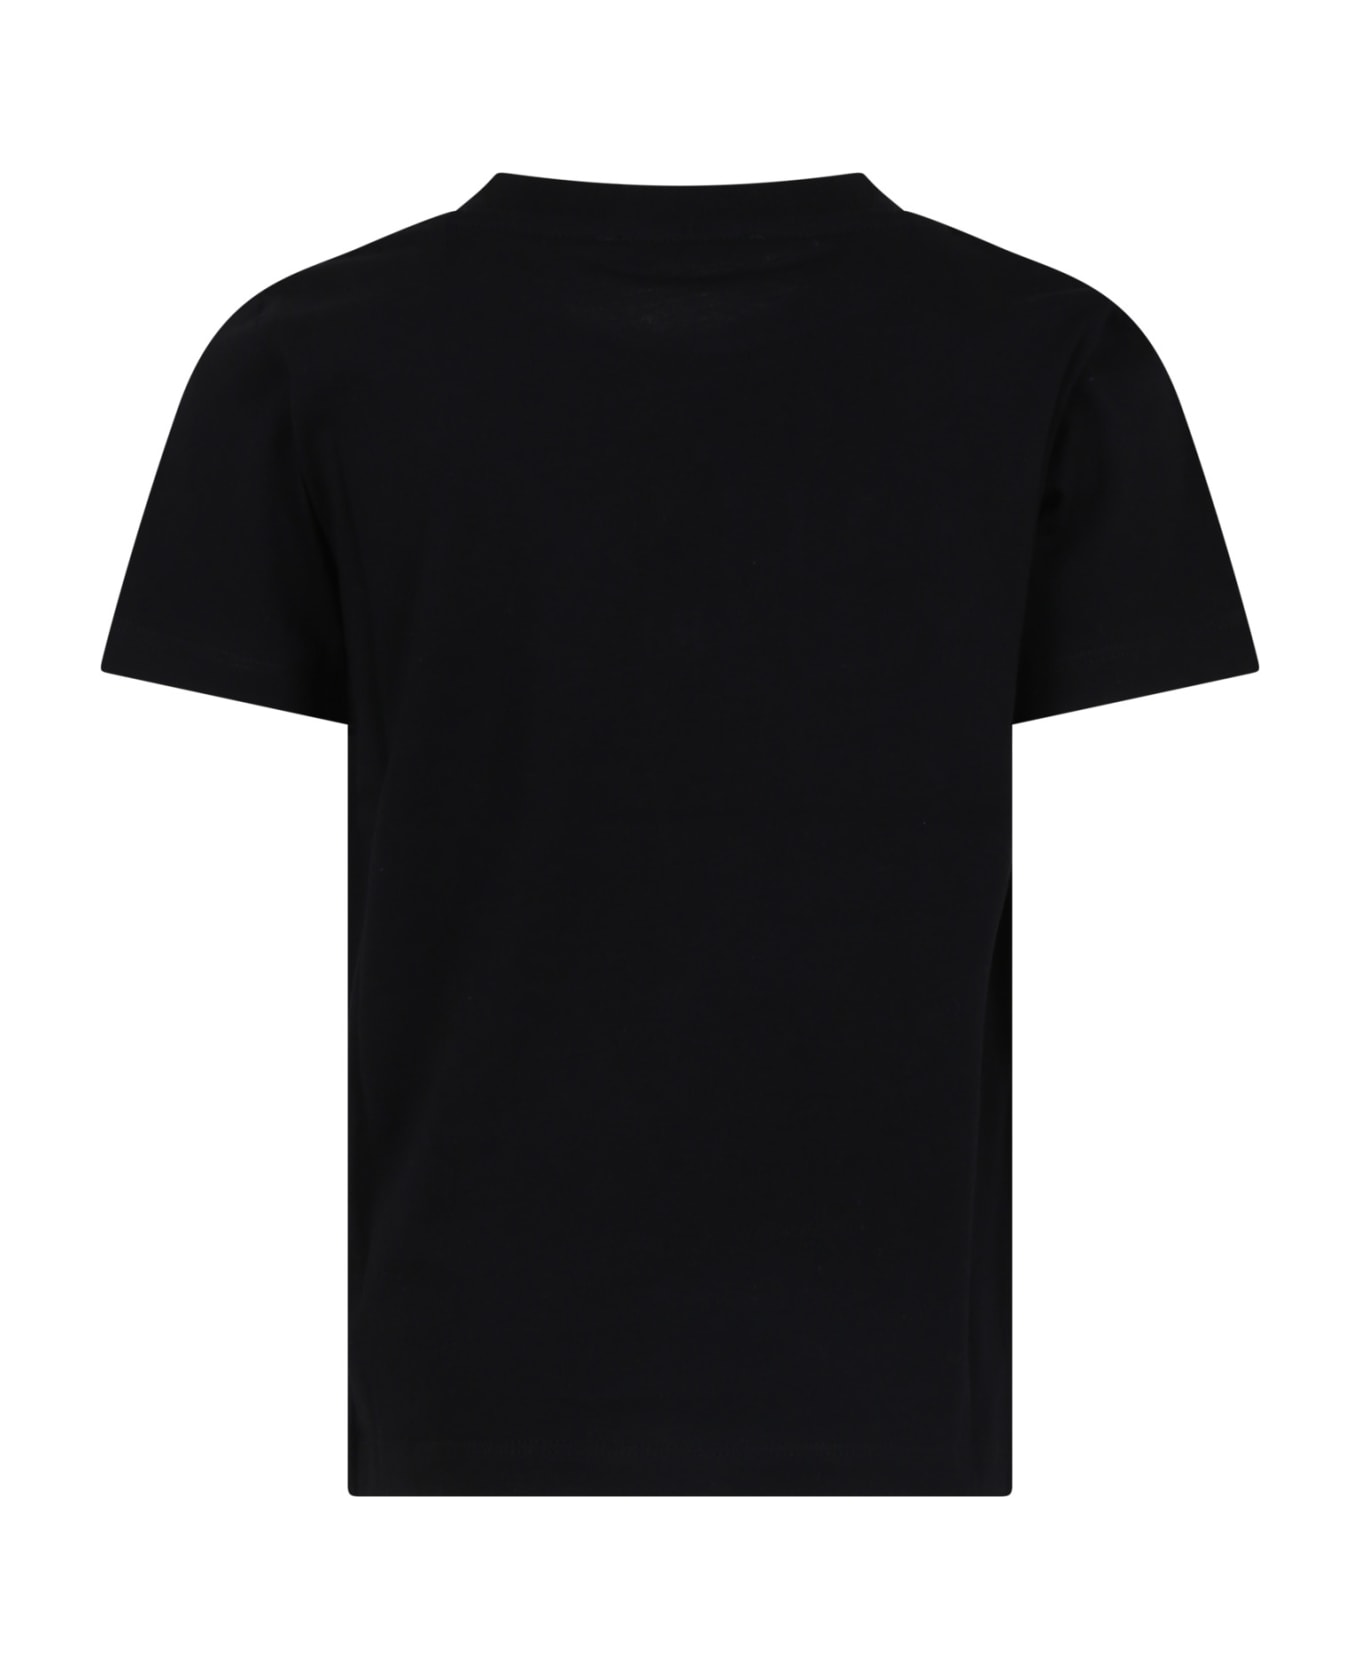 Balmain Black T-shirt For Kids With White Logo - Black Tシャツ＆ポロシャツ